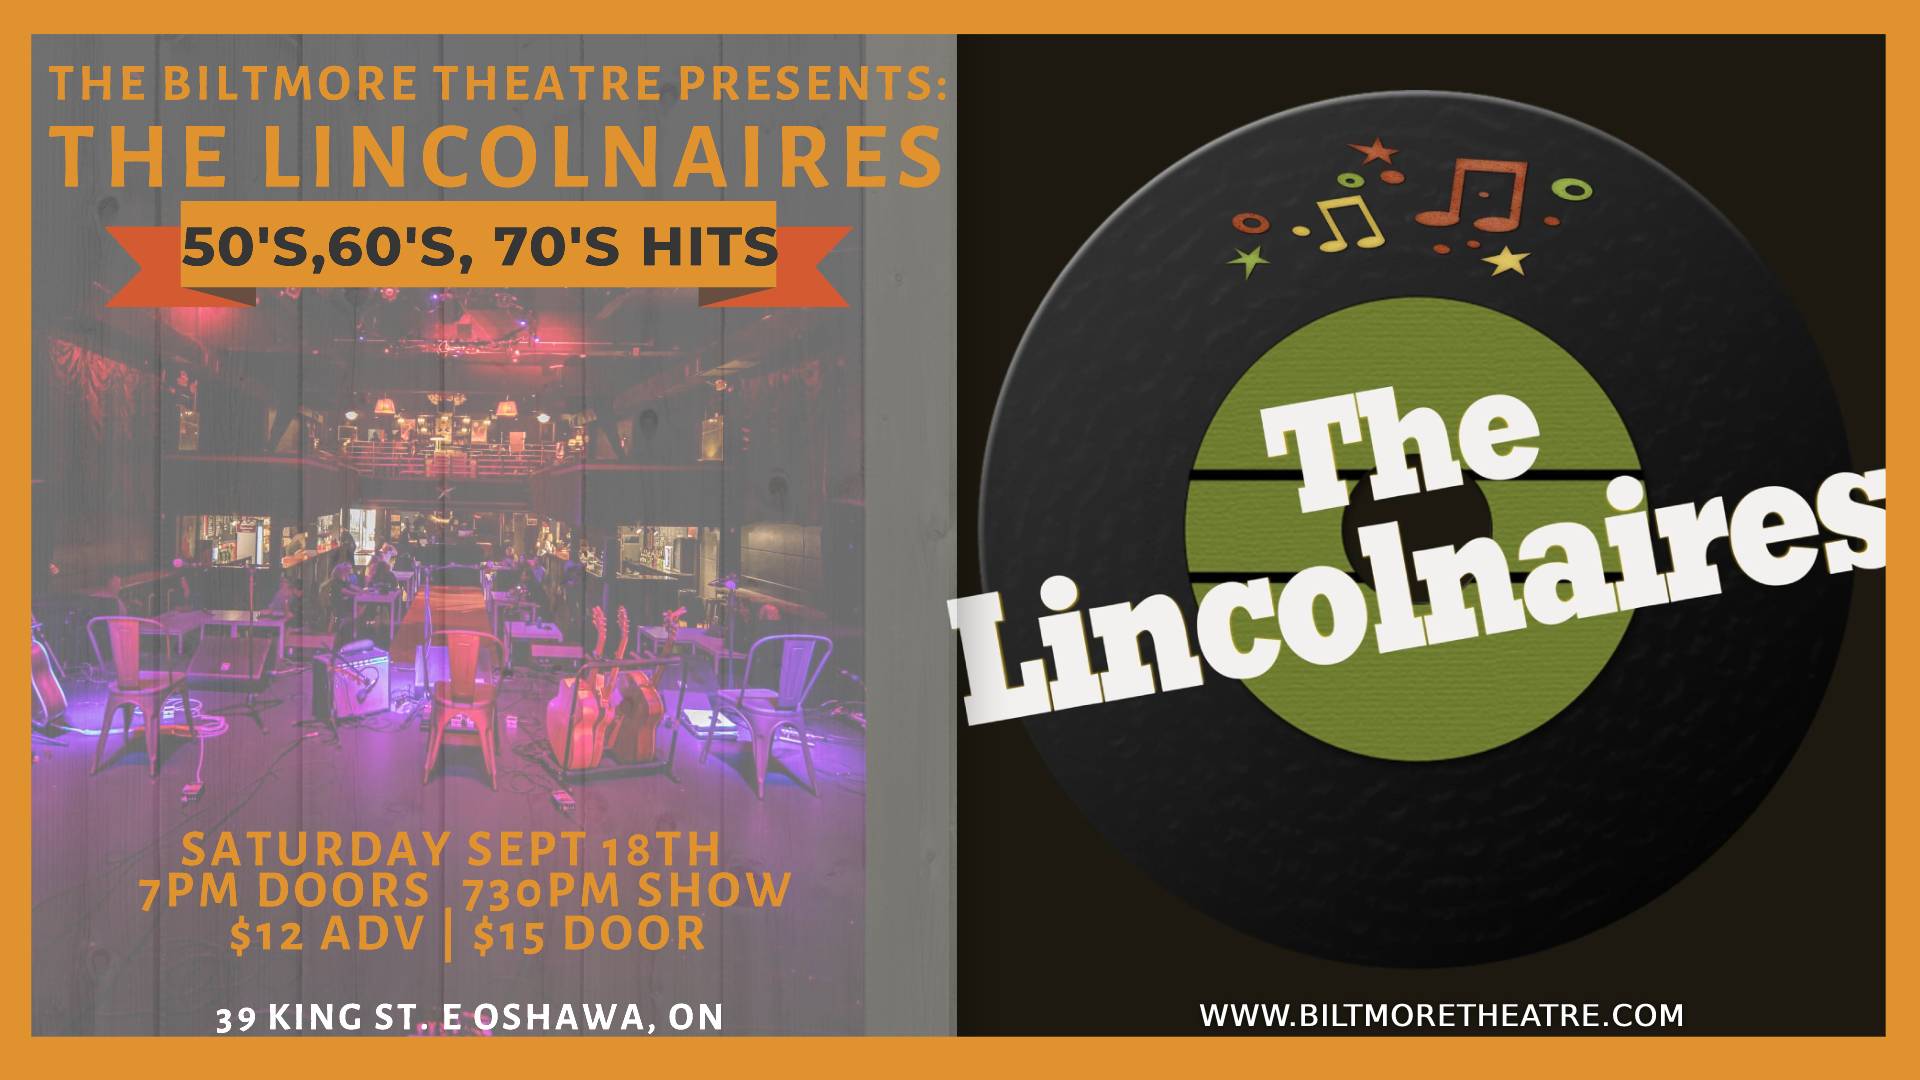 The Biltmore Theatre Presents: The Lincolnaires